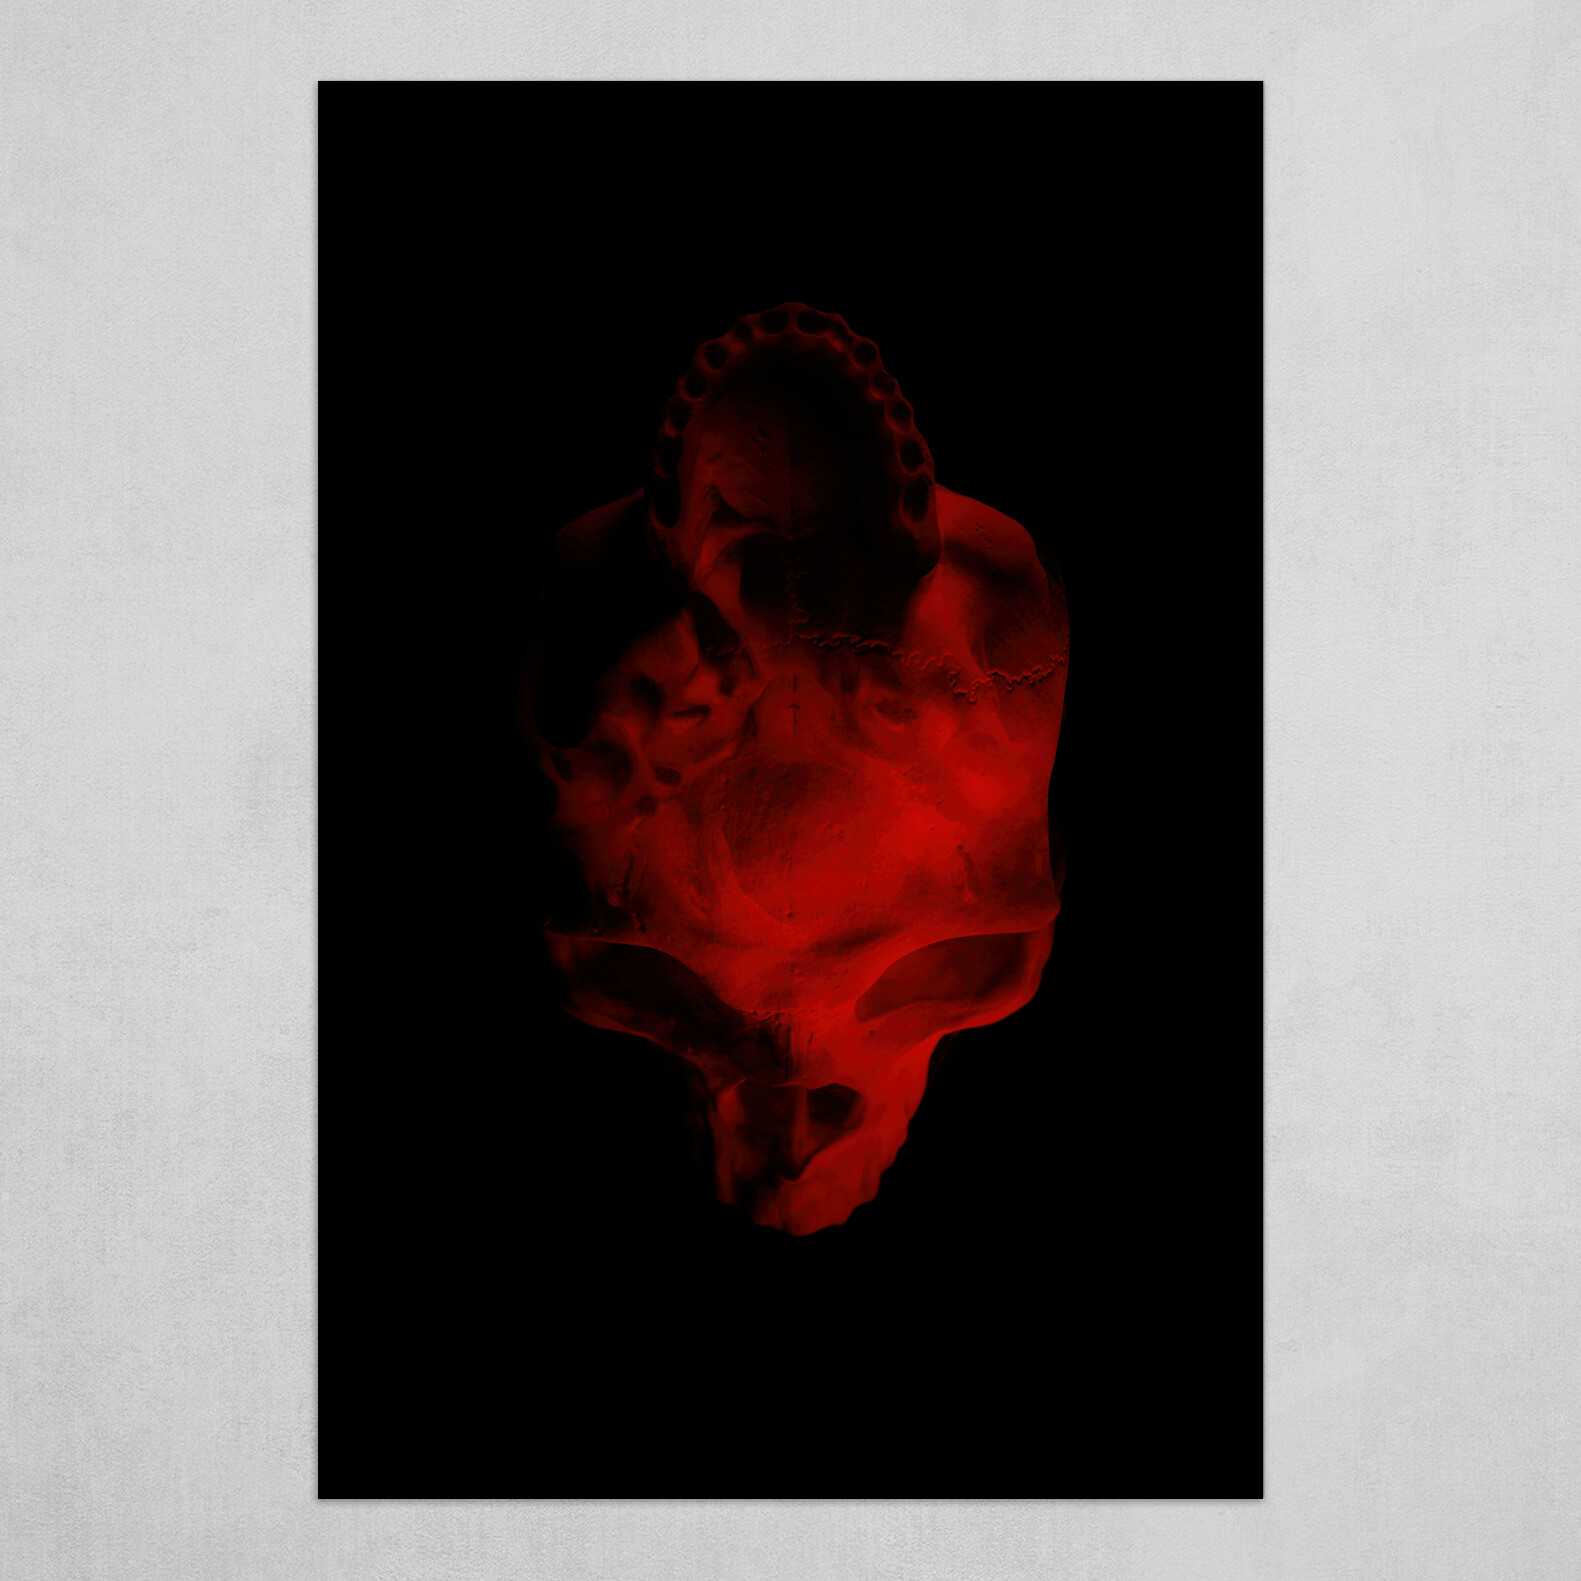 Human Skull #2 Double Exposure Red